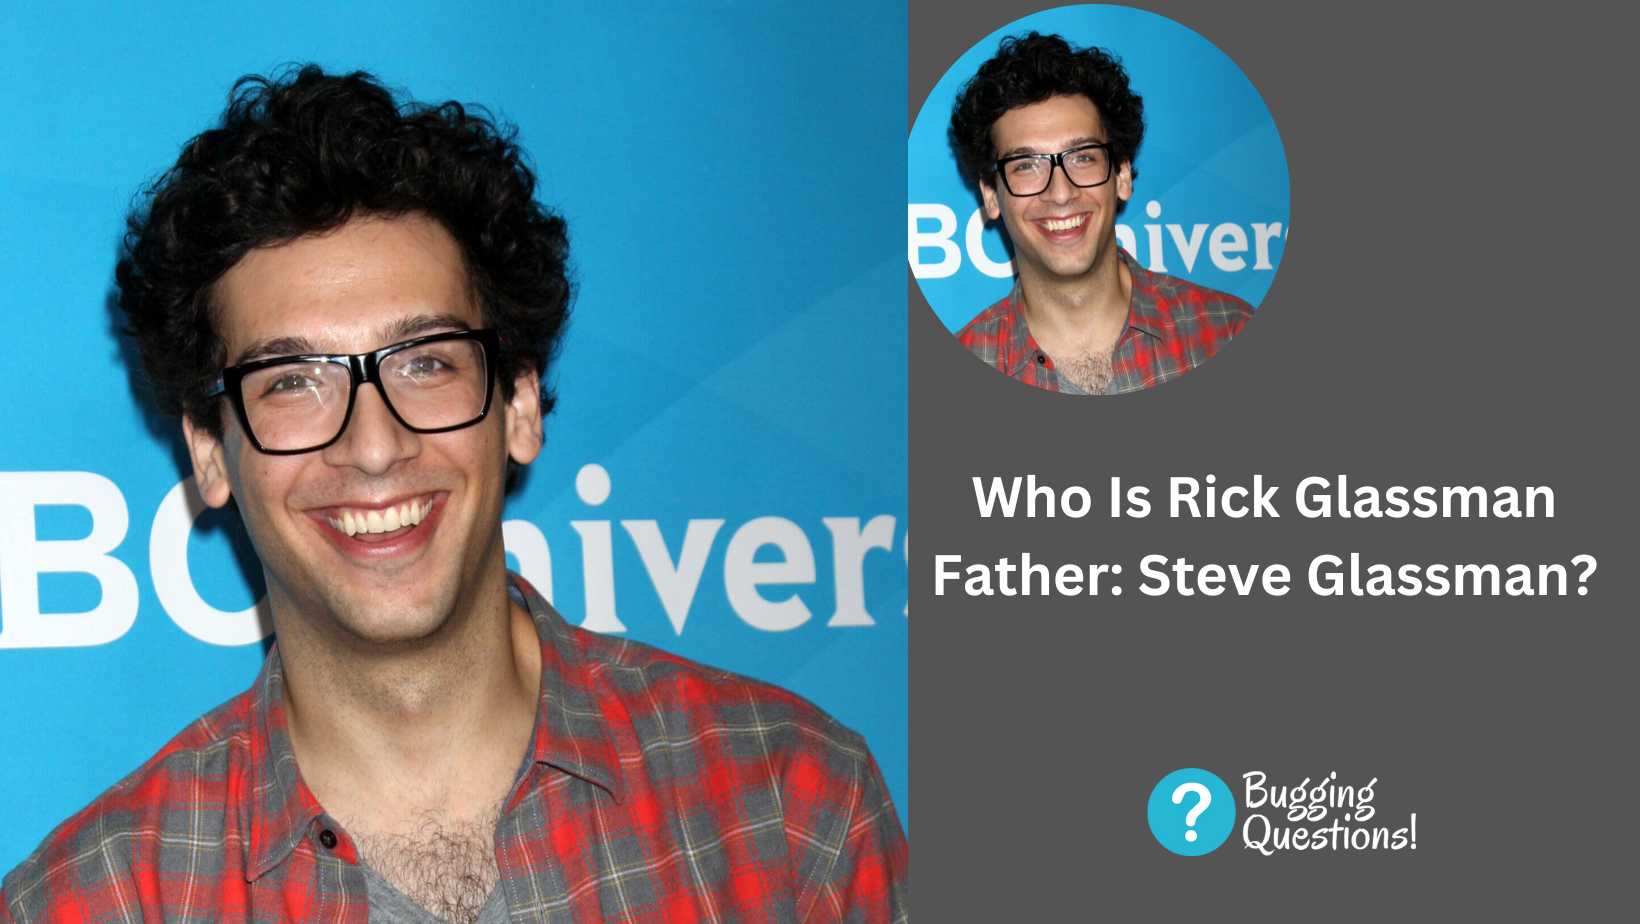 Who Is Rick Glassman Father: Steve Glassman?